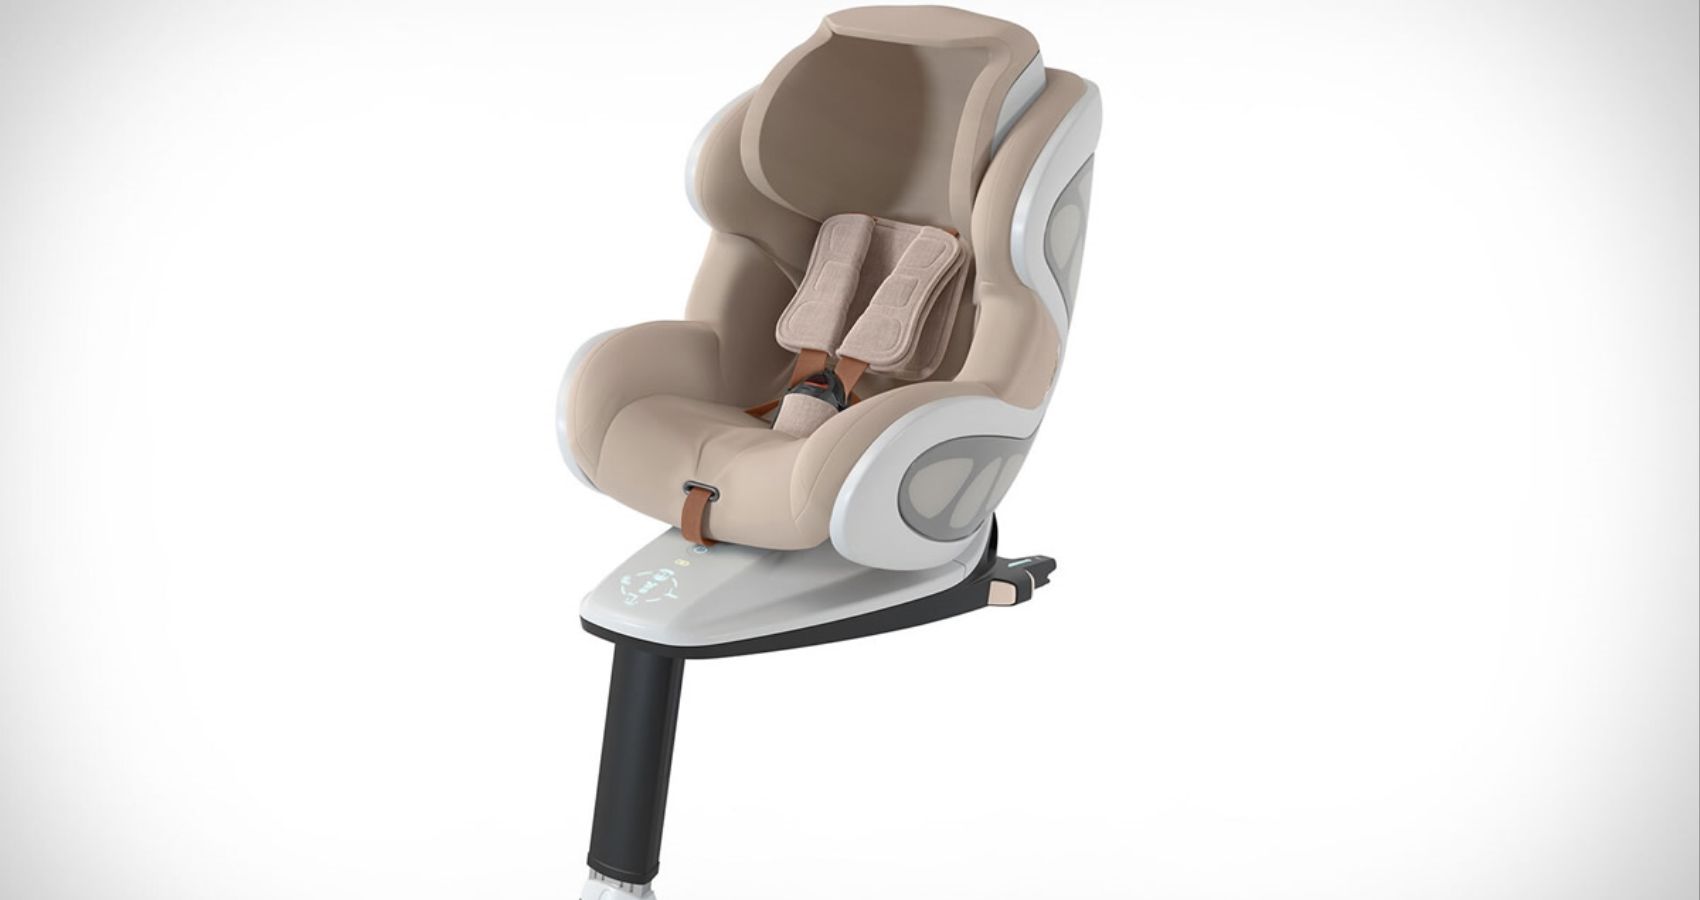 Frank Stephenson Design Babyshark Seat Front View